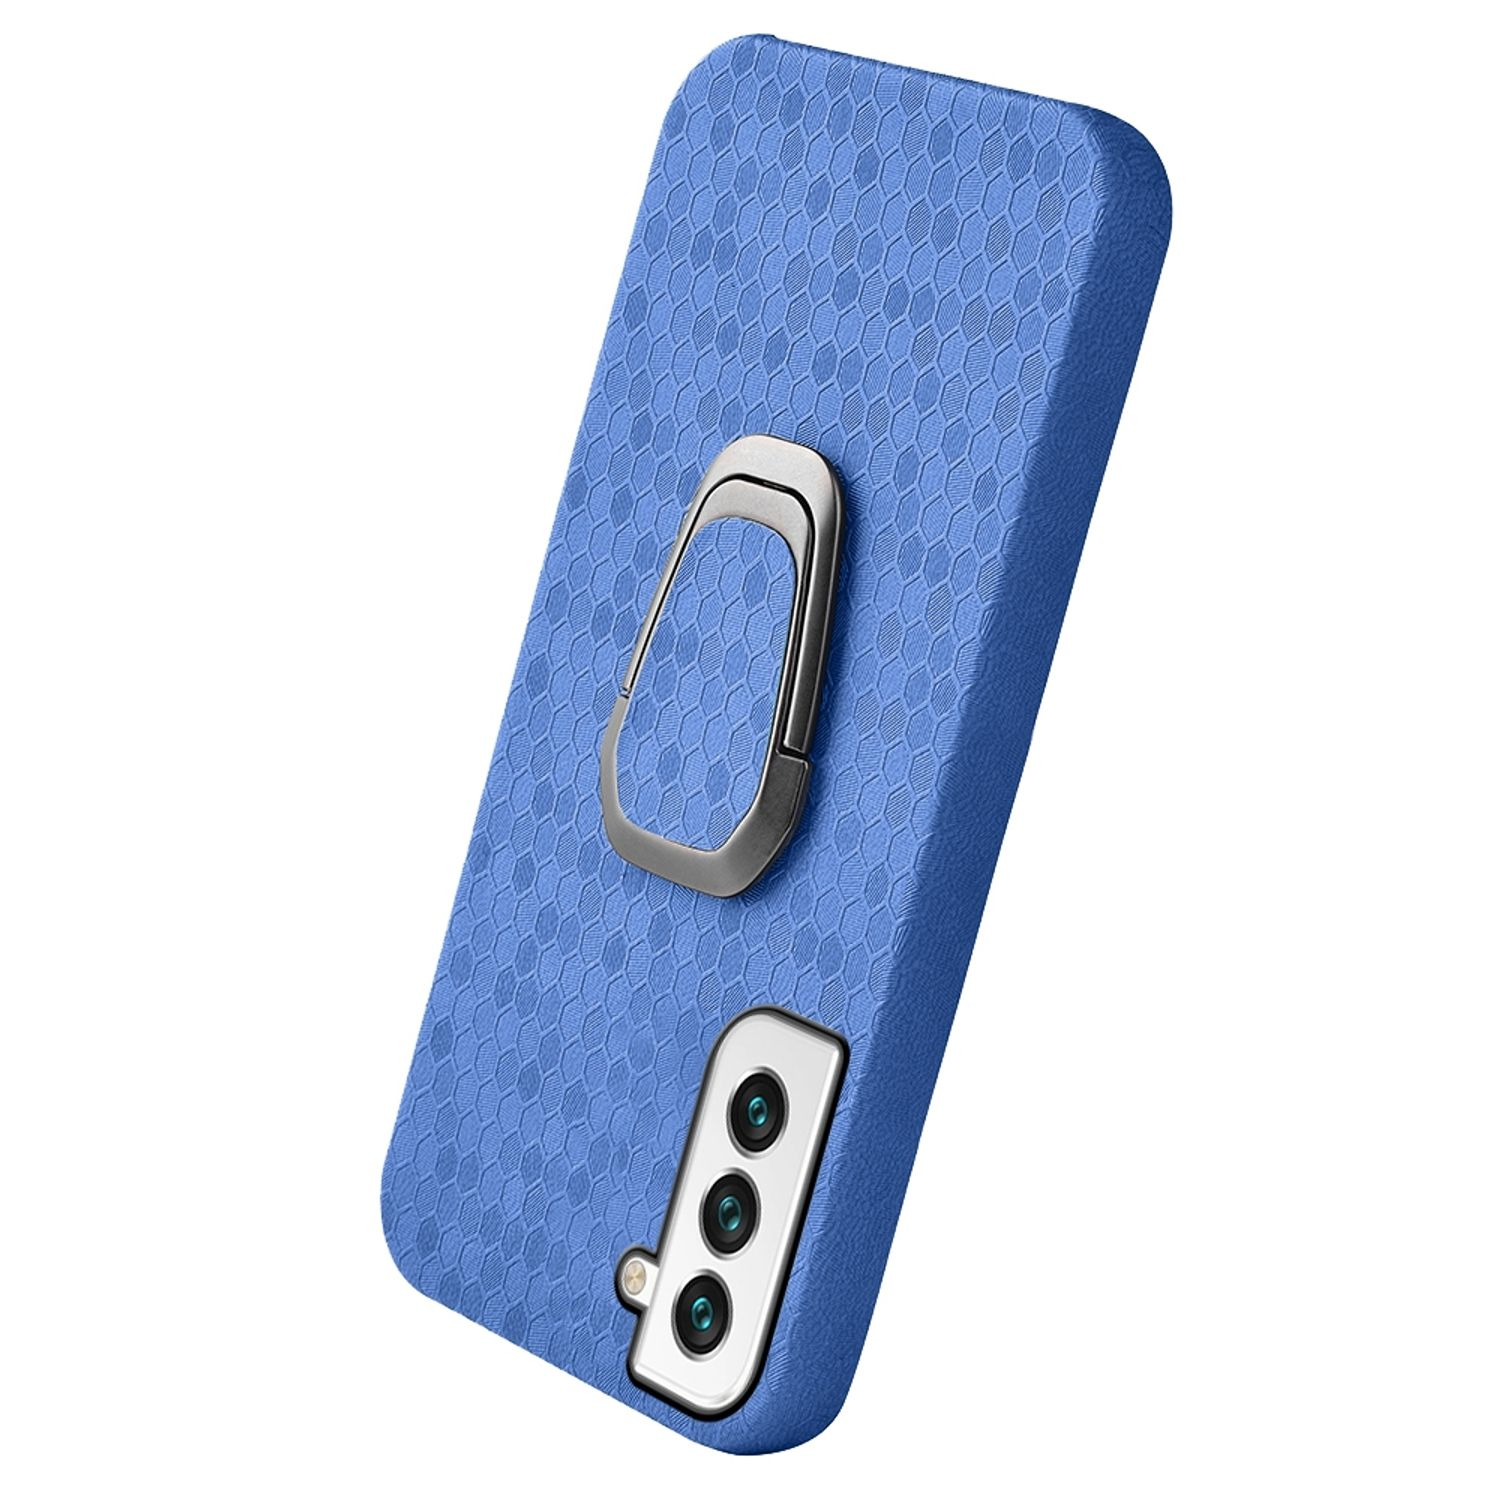 KÖNIG DESIGN Case, Galaxy S22 Samsung, Backcover, Navy Blau 5G